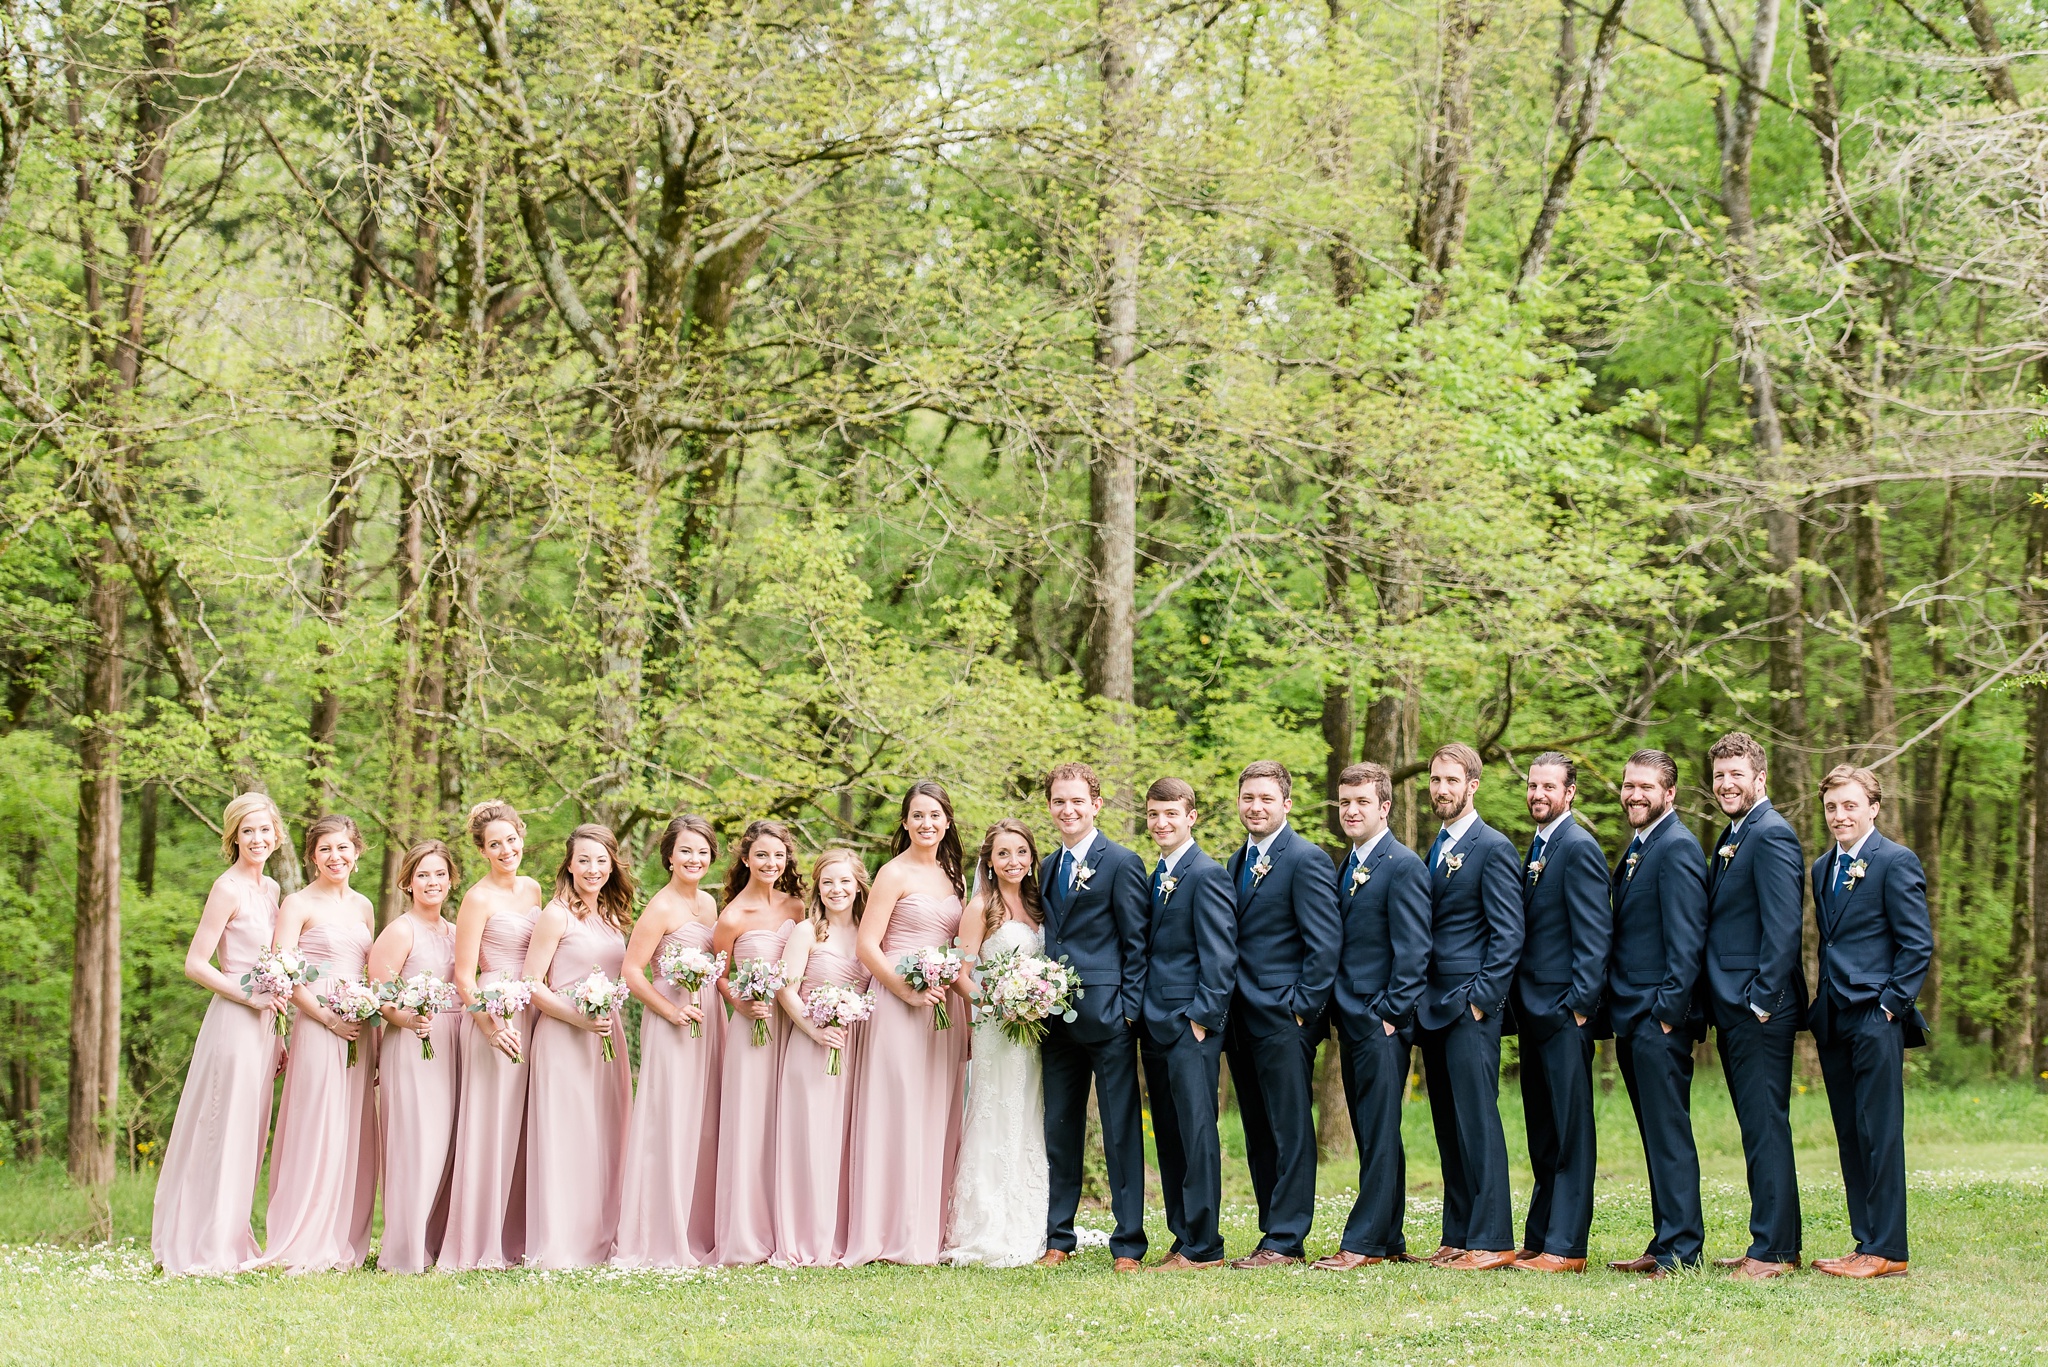 Sonnet House Blush and Gold Spring Wedding | Birmingham Alabama Wedding Photographers_0048.jpg